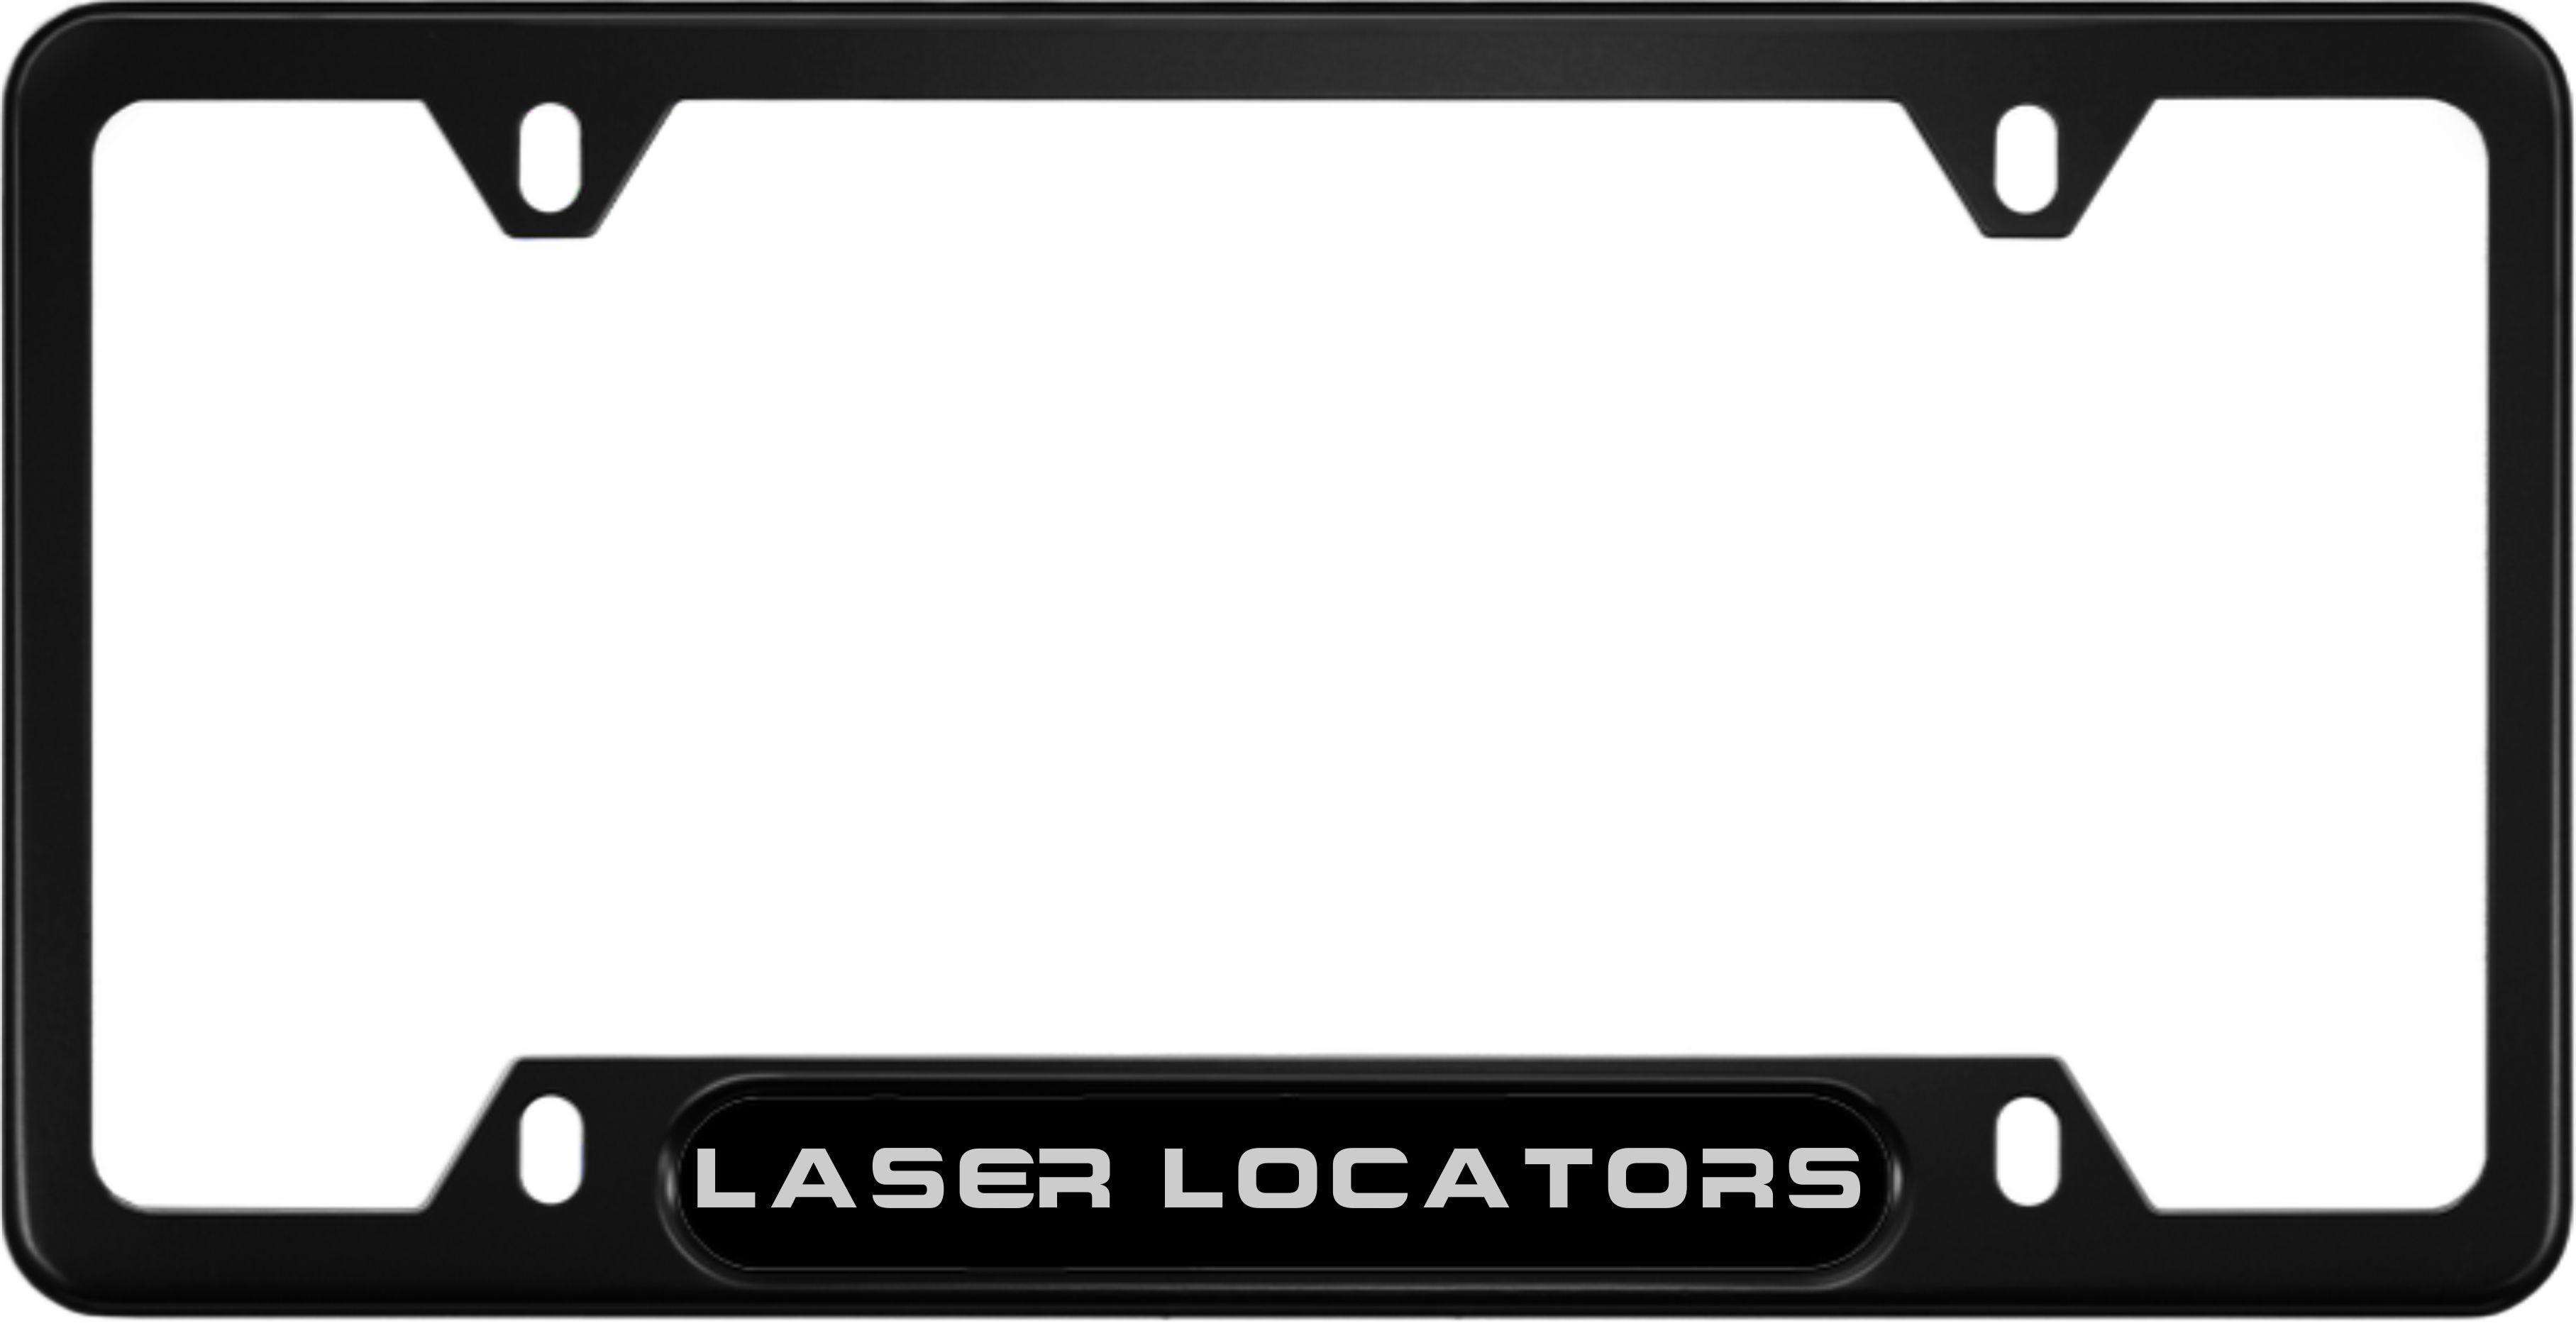 Laser Locators - Anodized Aluminum License Plate Frame - Black